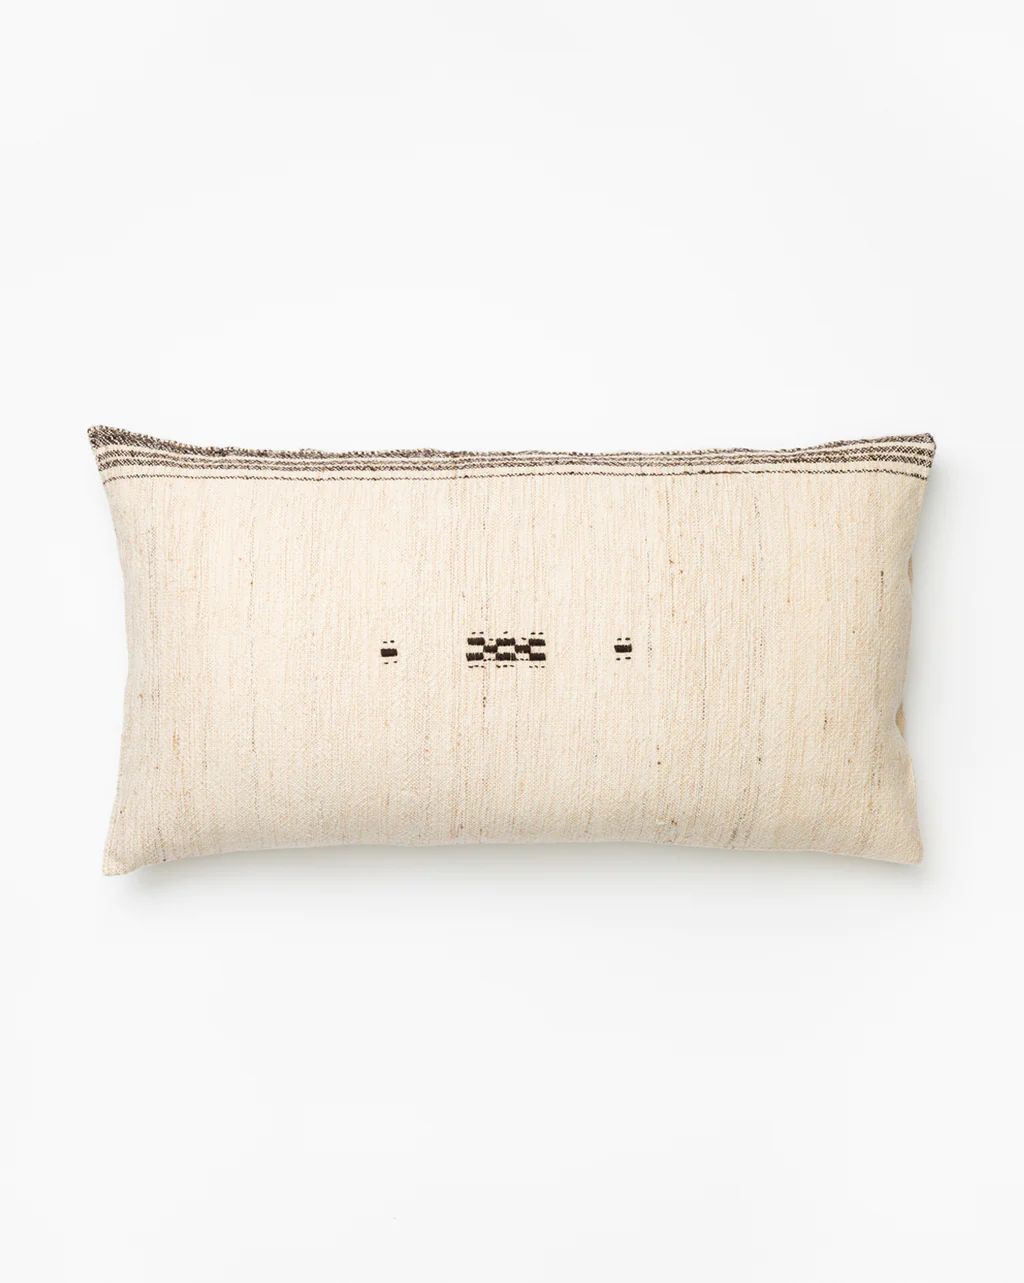 Jessamine Pillow | McGee & Co.